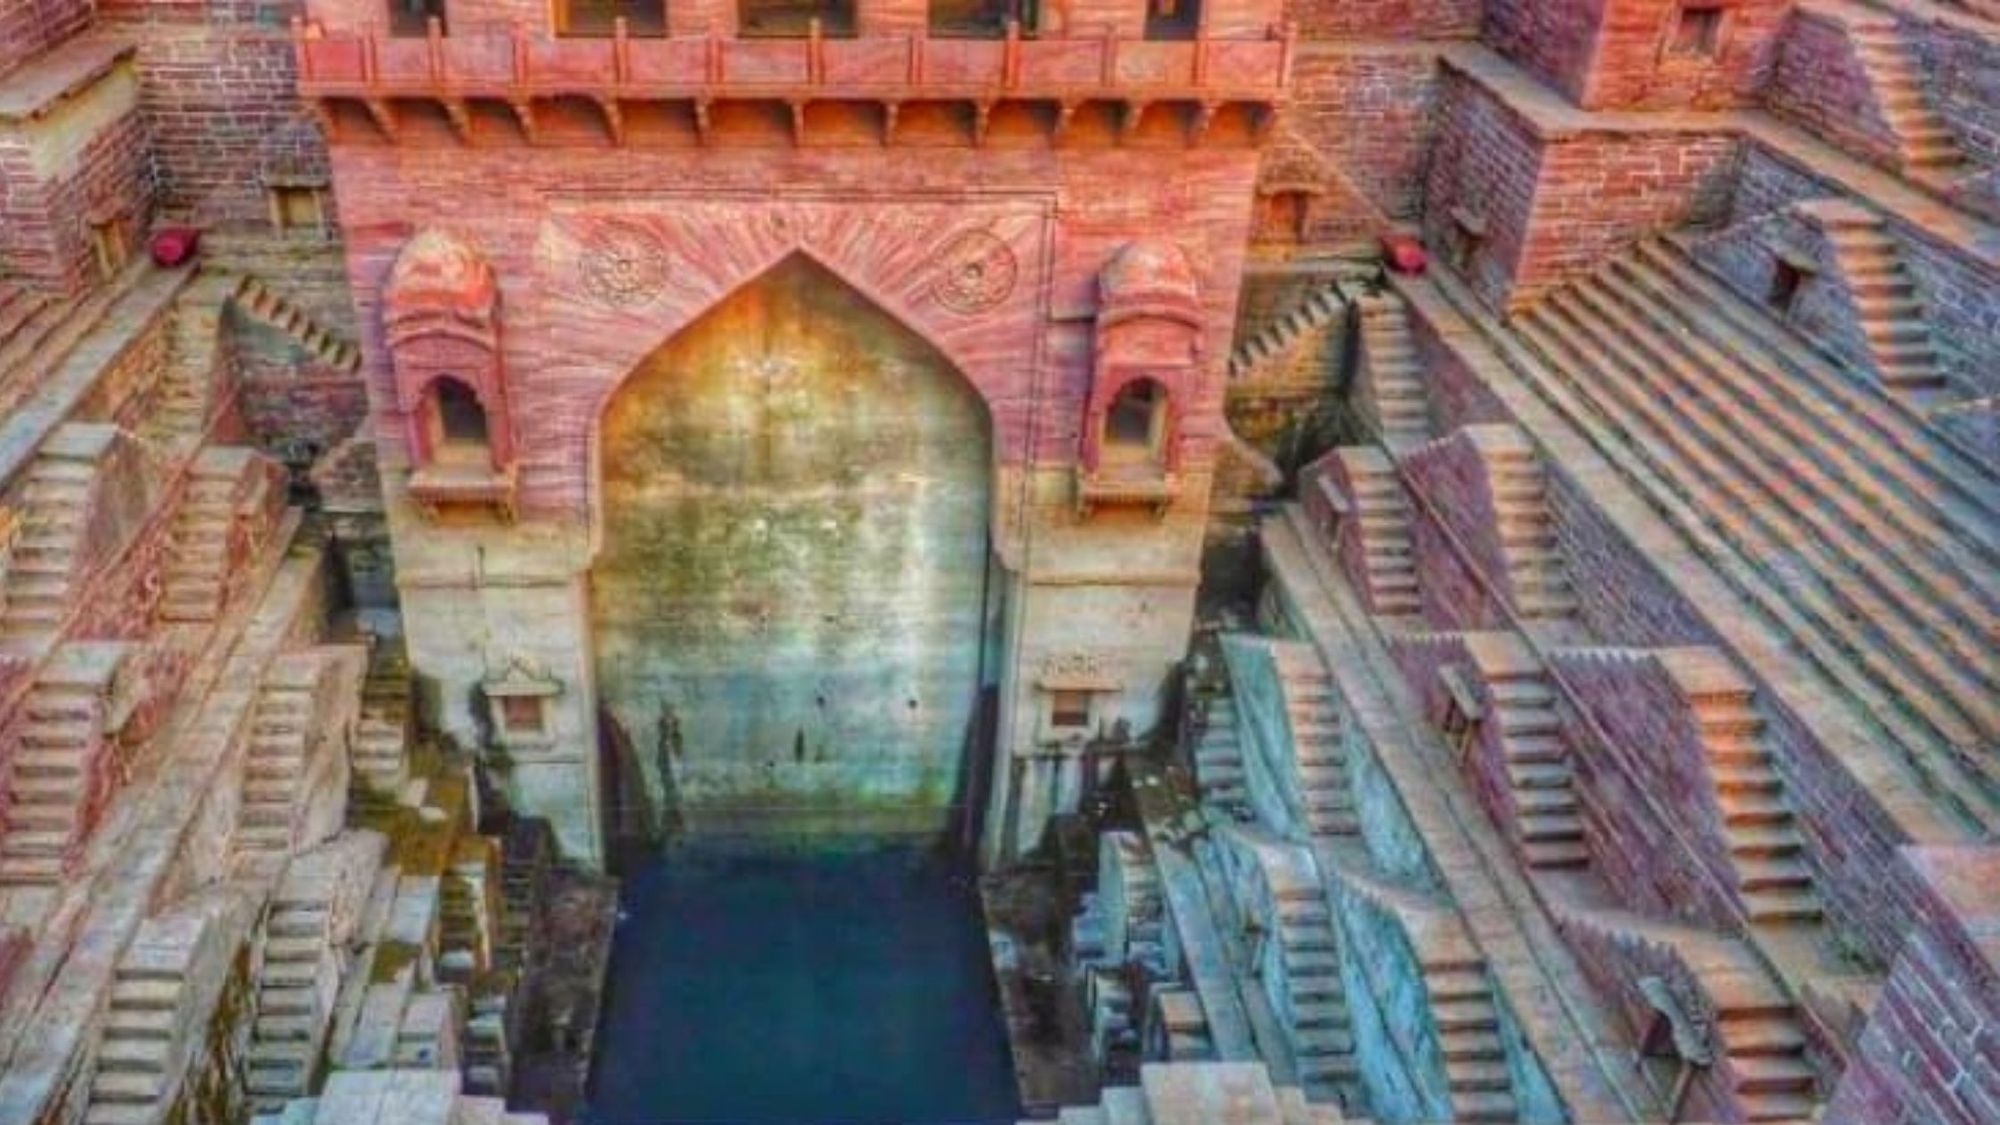 Toorji Ka Jhalra, Jodhpur: Architecture, History and How to Reach